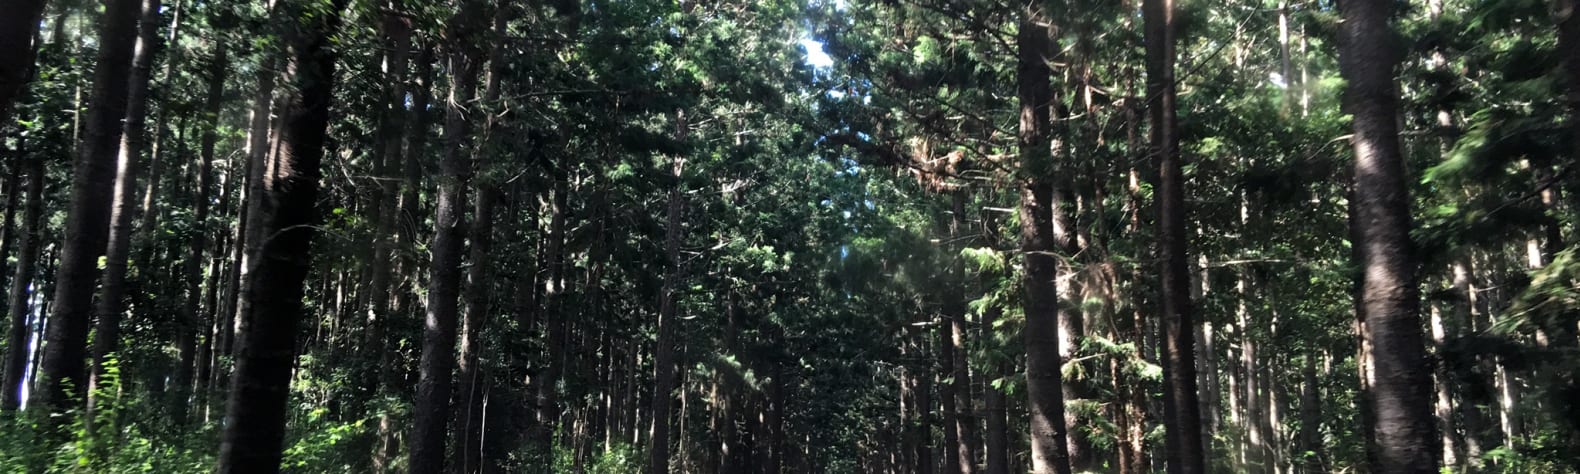 Behind The Pines Kalpowar